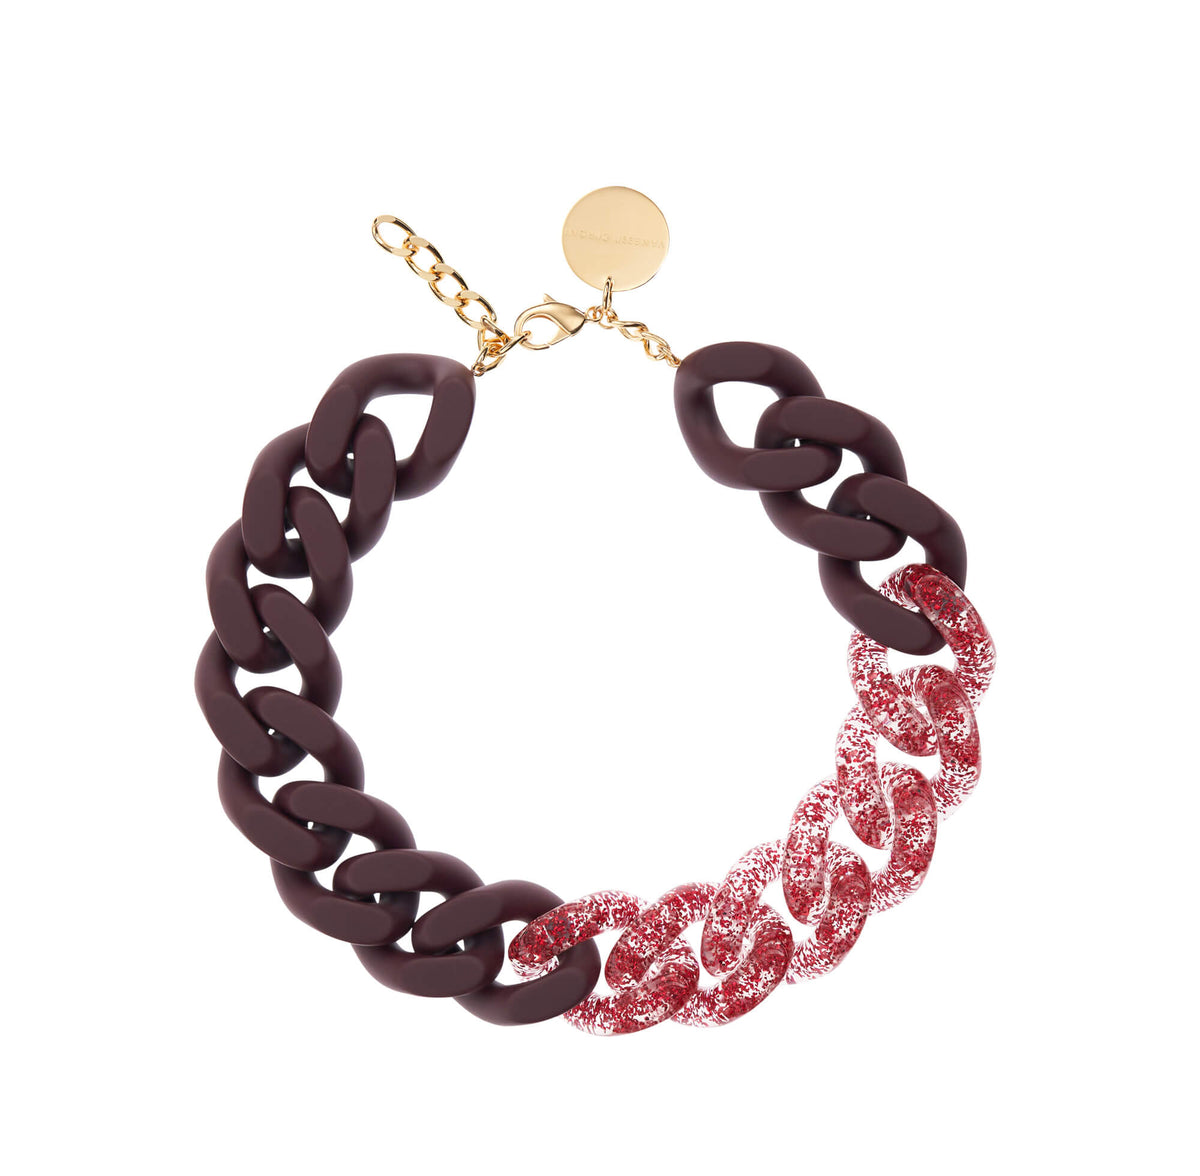 BIG Flat Chain Necklace 2 Color Red Glitter - Matt Aubergine